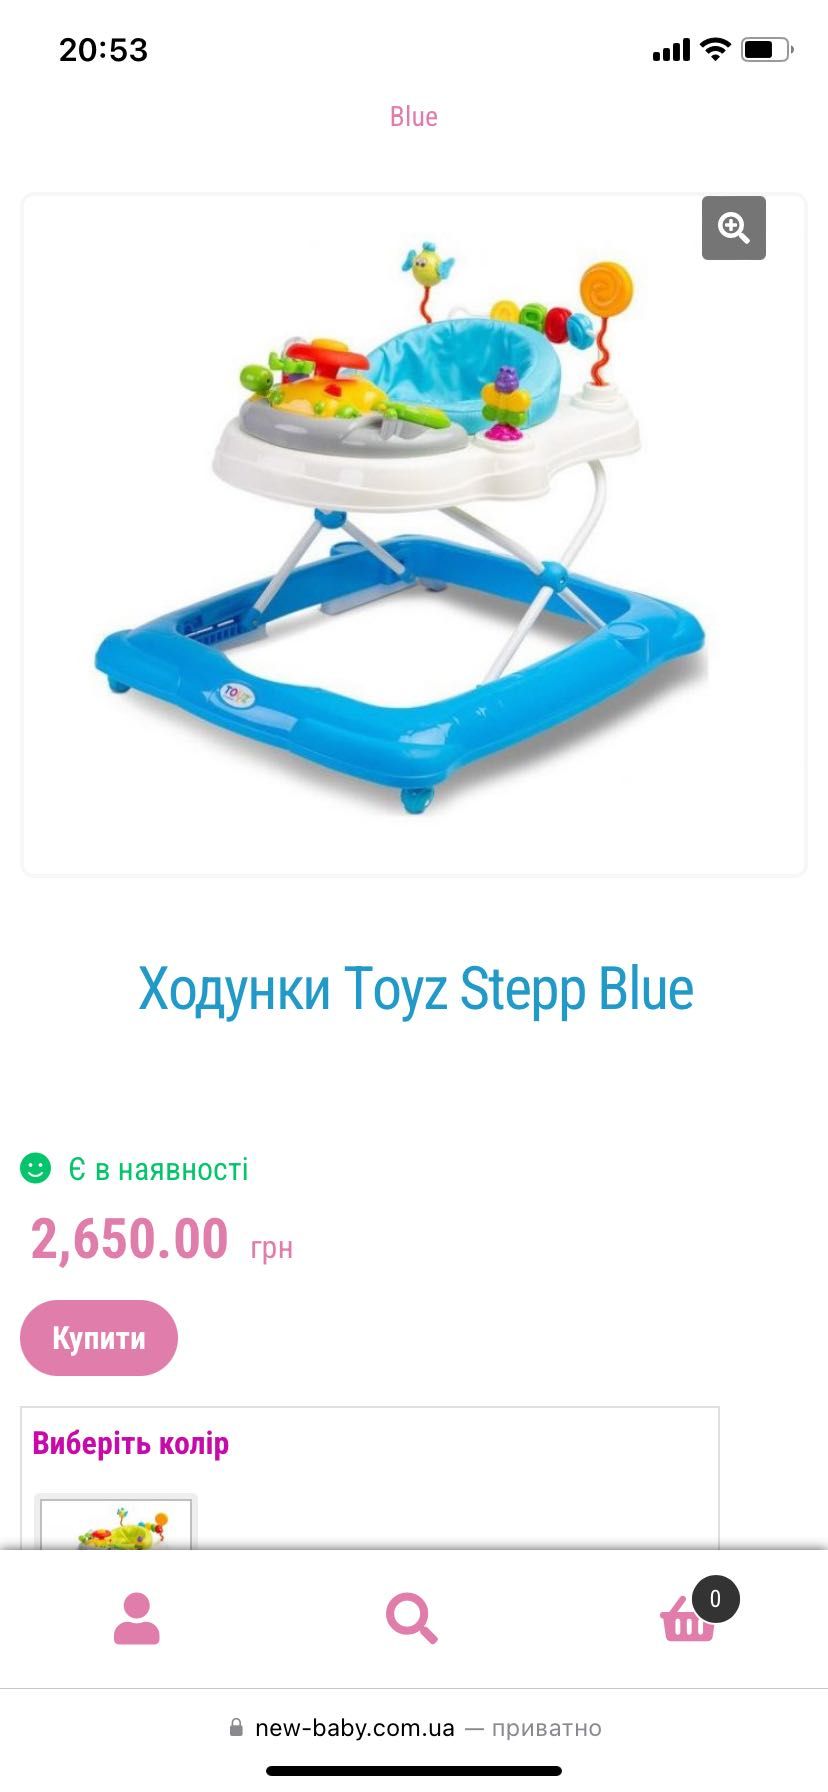 Ходунки Toyz Stepp Blue